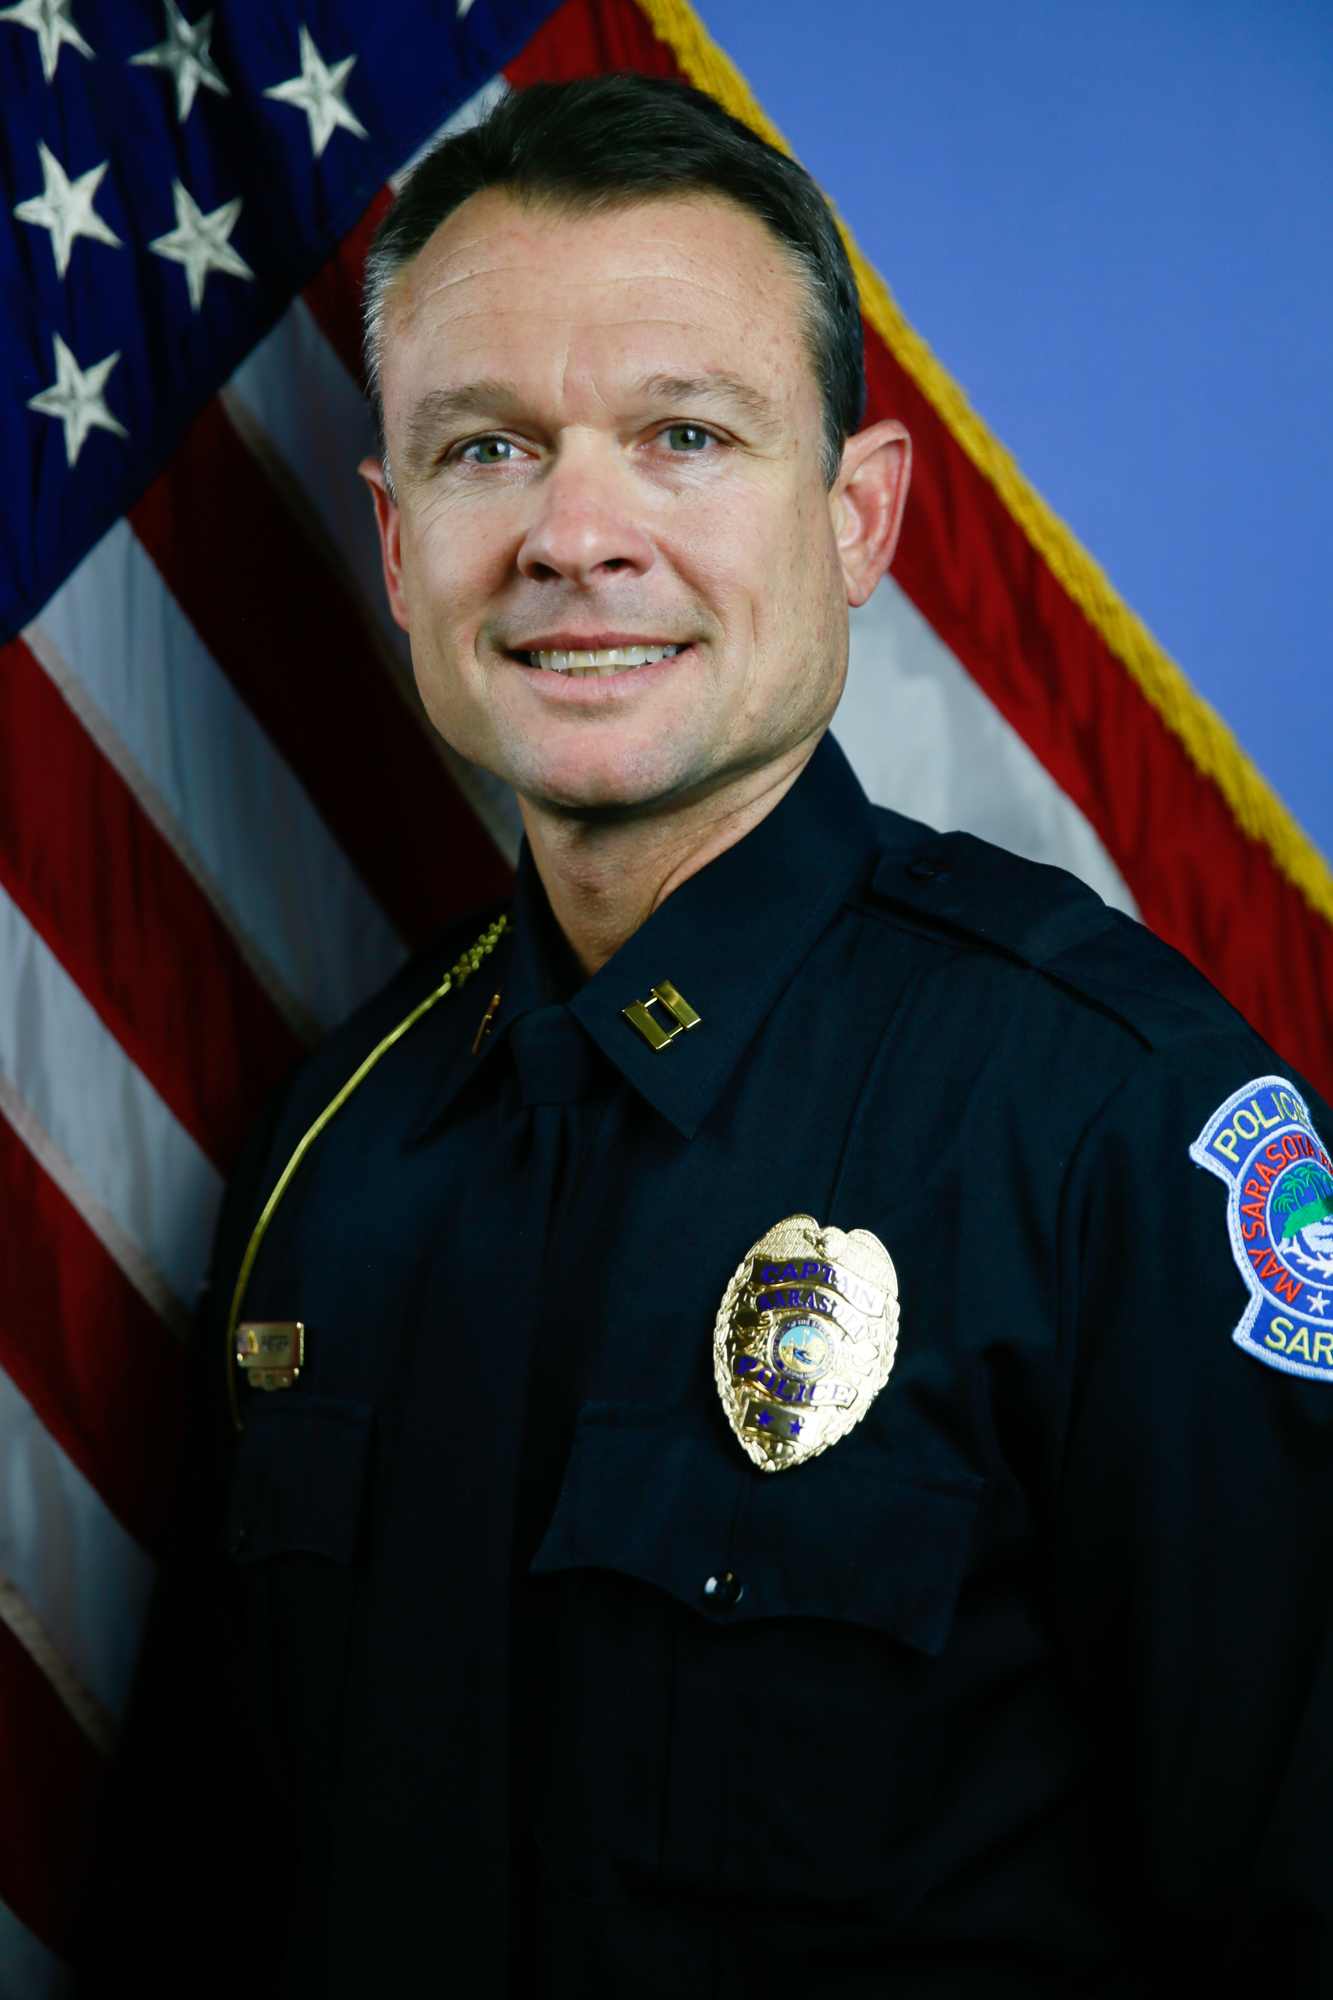 Police Chief Jim Rieser